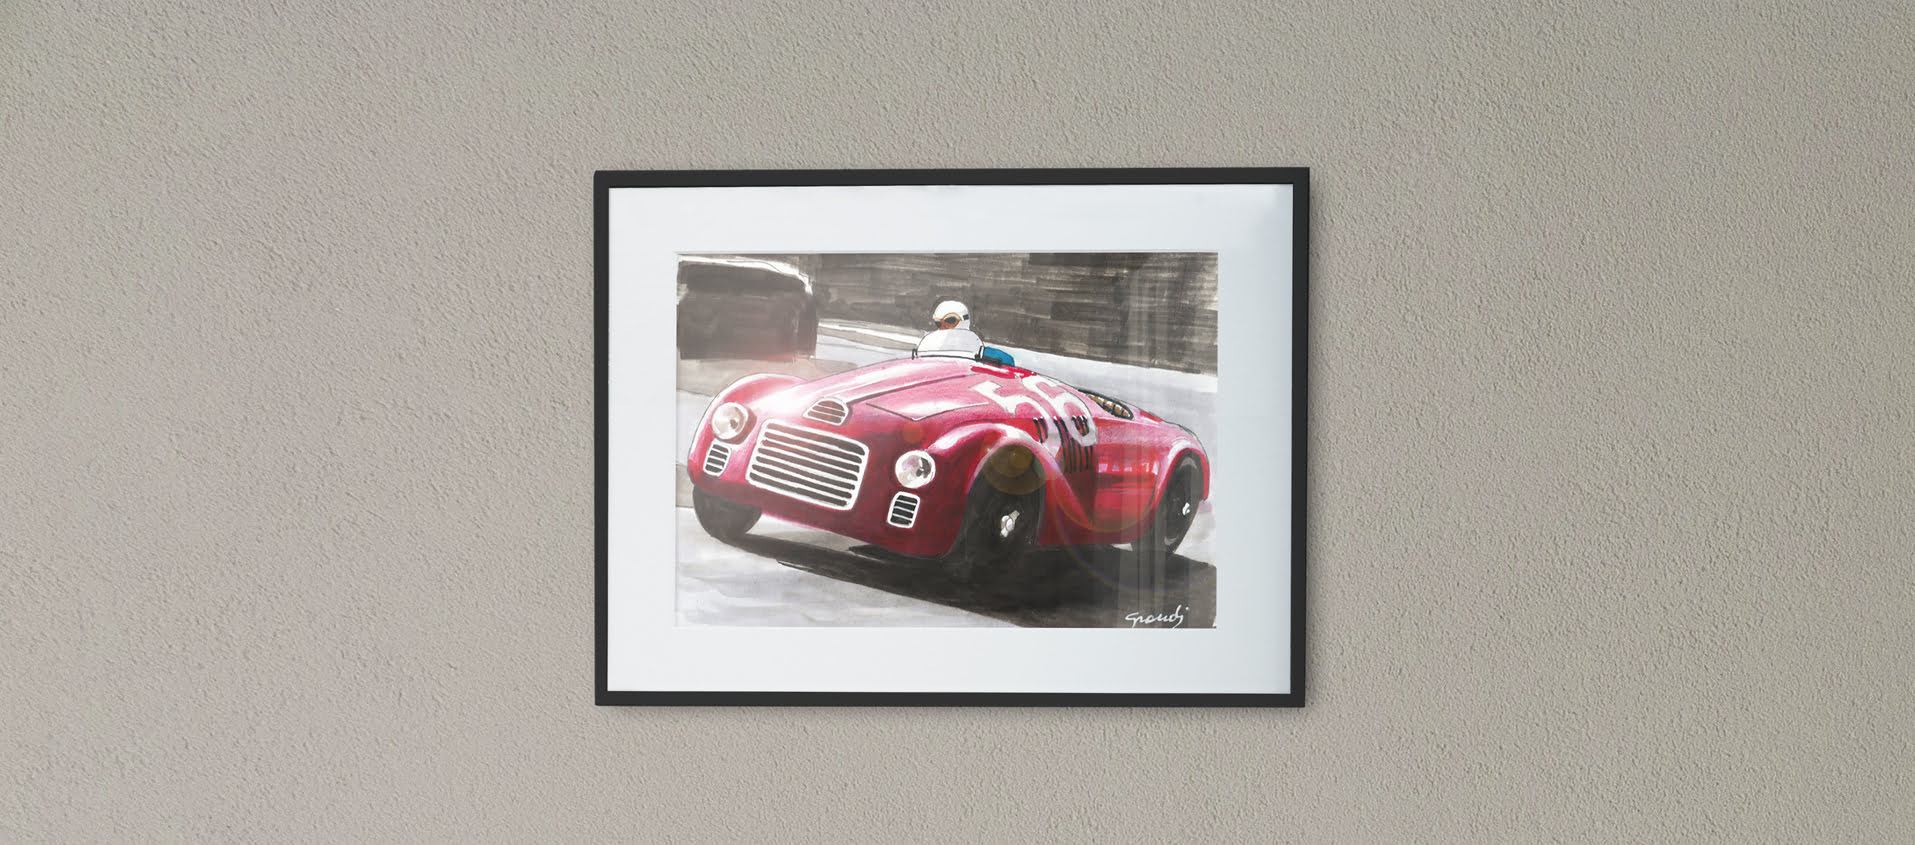 1947. Ferrari. At last!